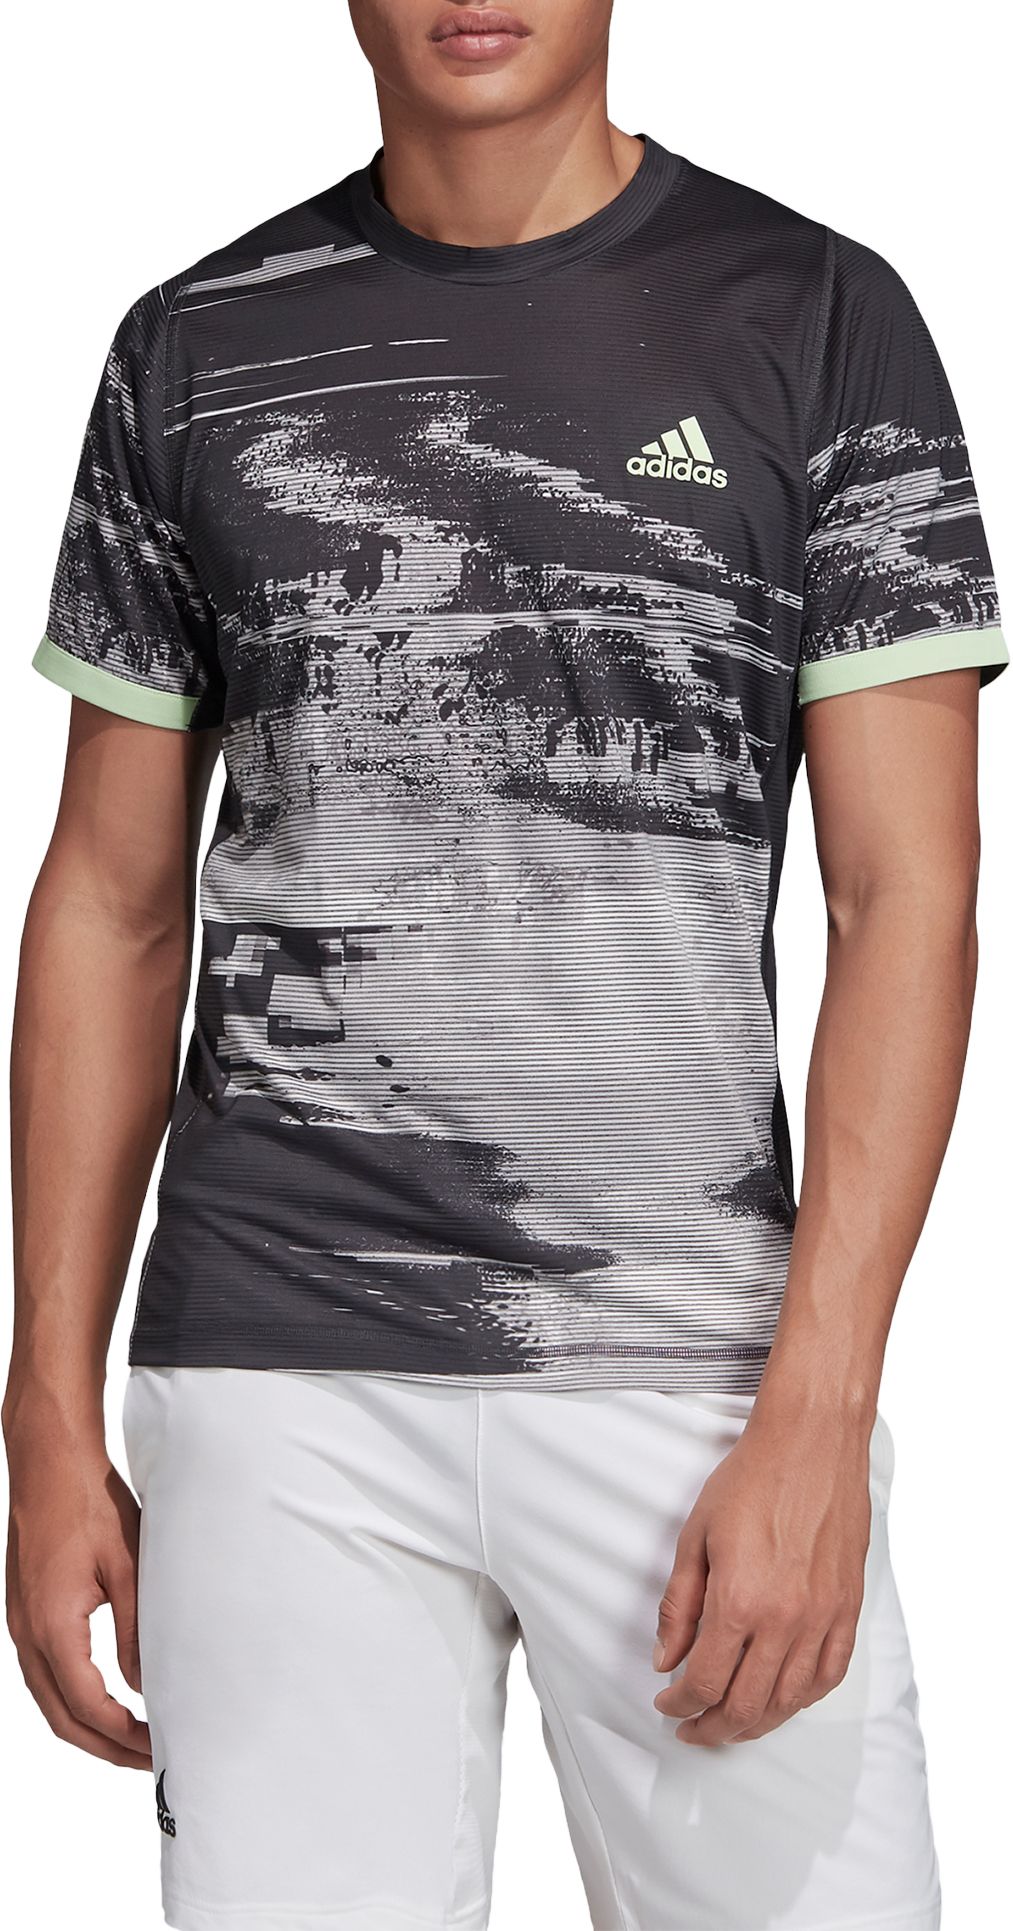 adidas Men's New York Printed Tennis T-Shirt - .97